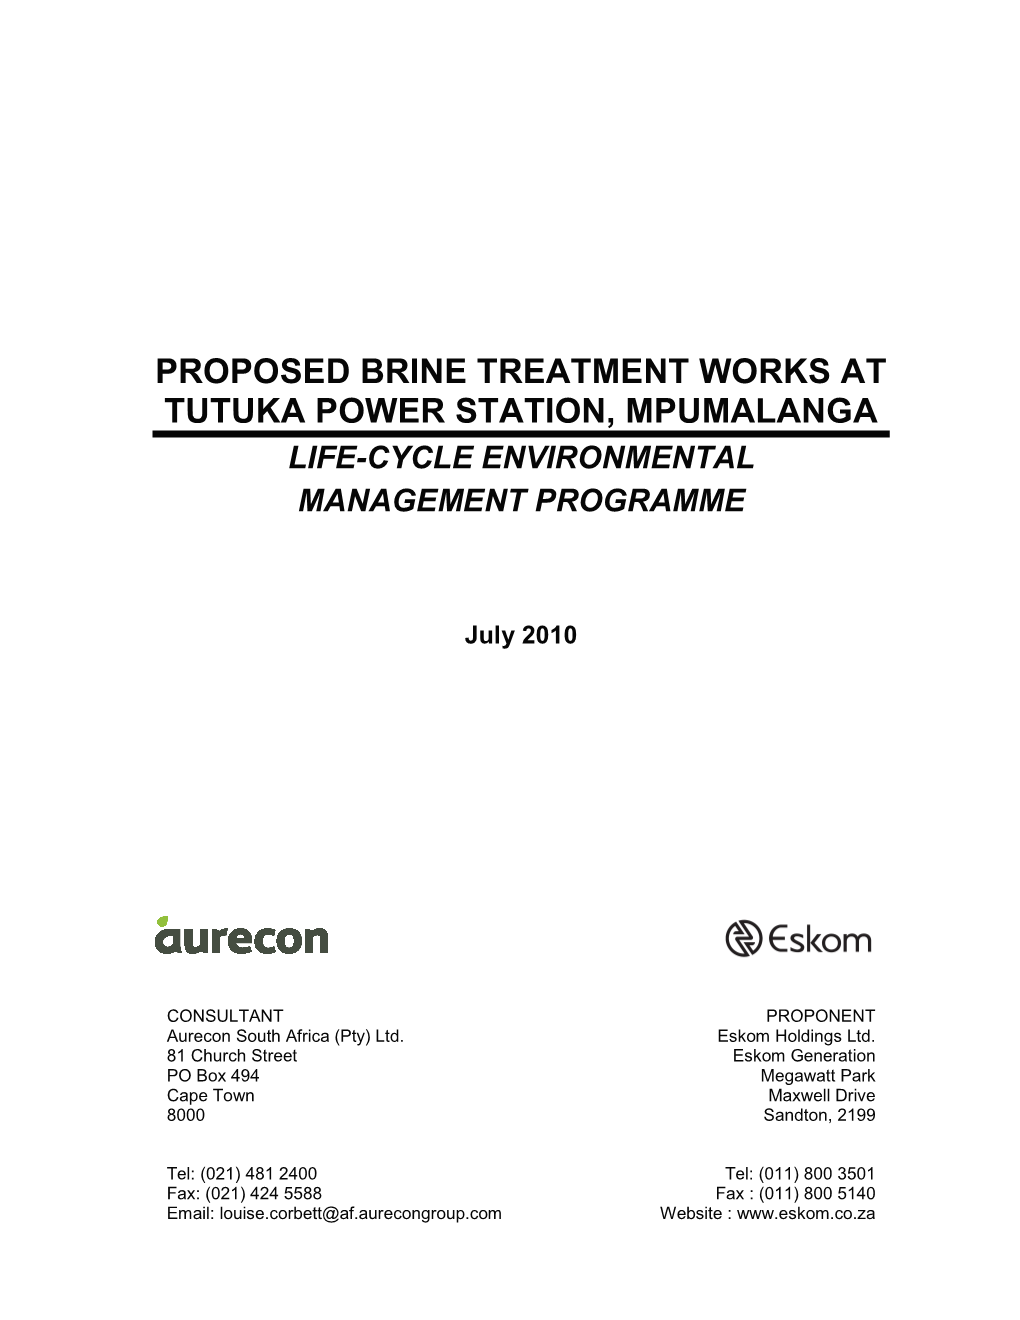 Proposed Brine Treatment Works at Tutuka Power Station, Mpumalanga Life-Cycle Environmental Management Programme